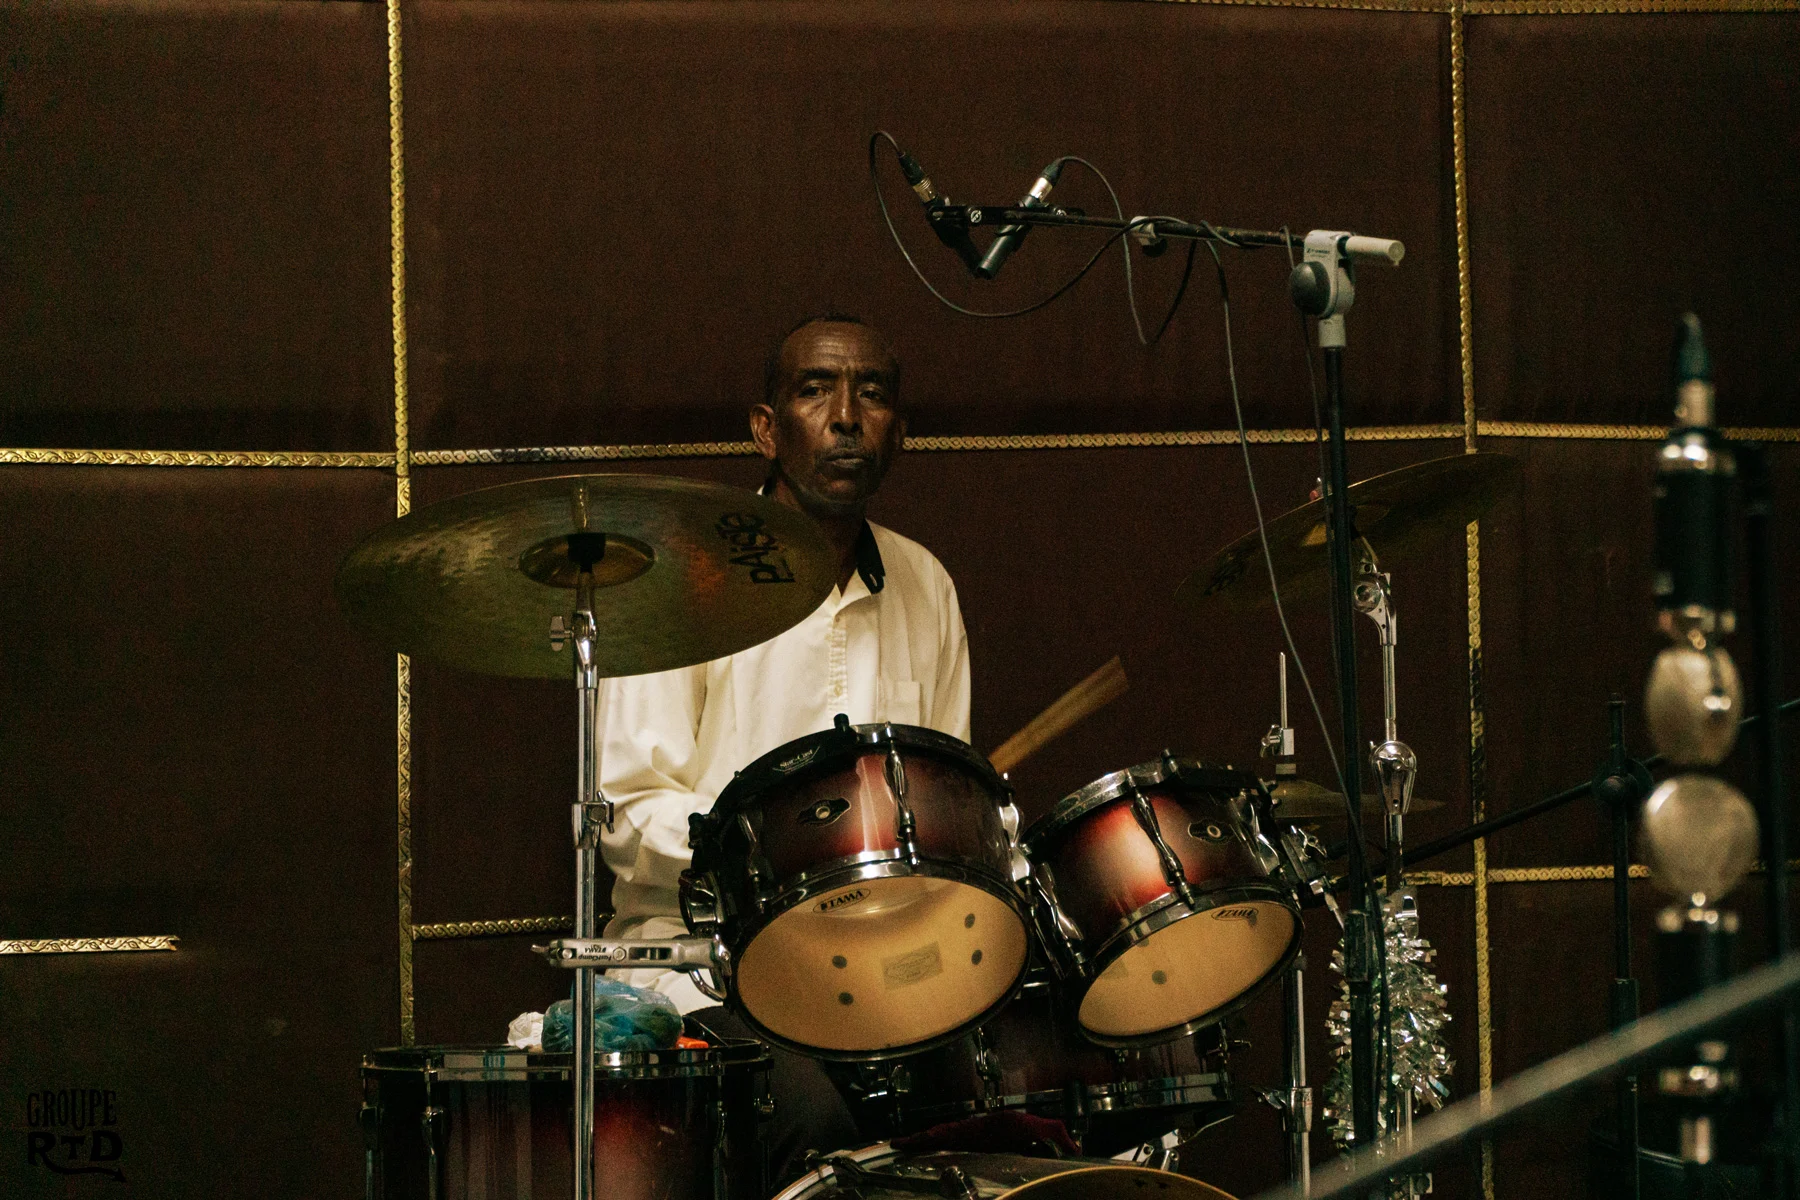 Omar Farah Houssein (drums) Janto Djassi